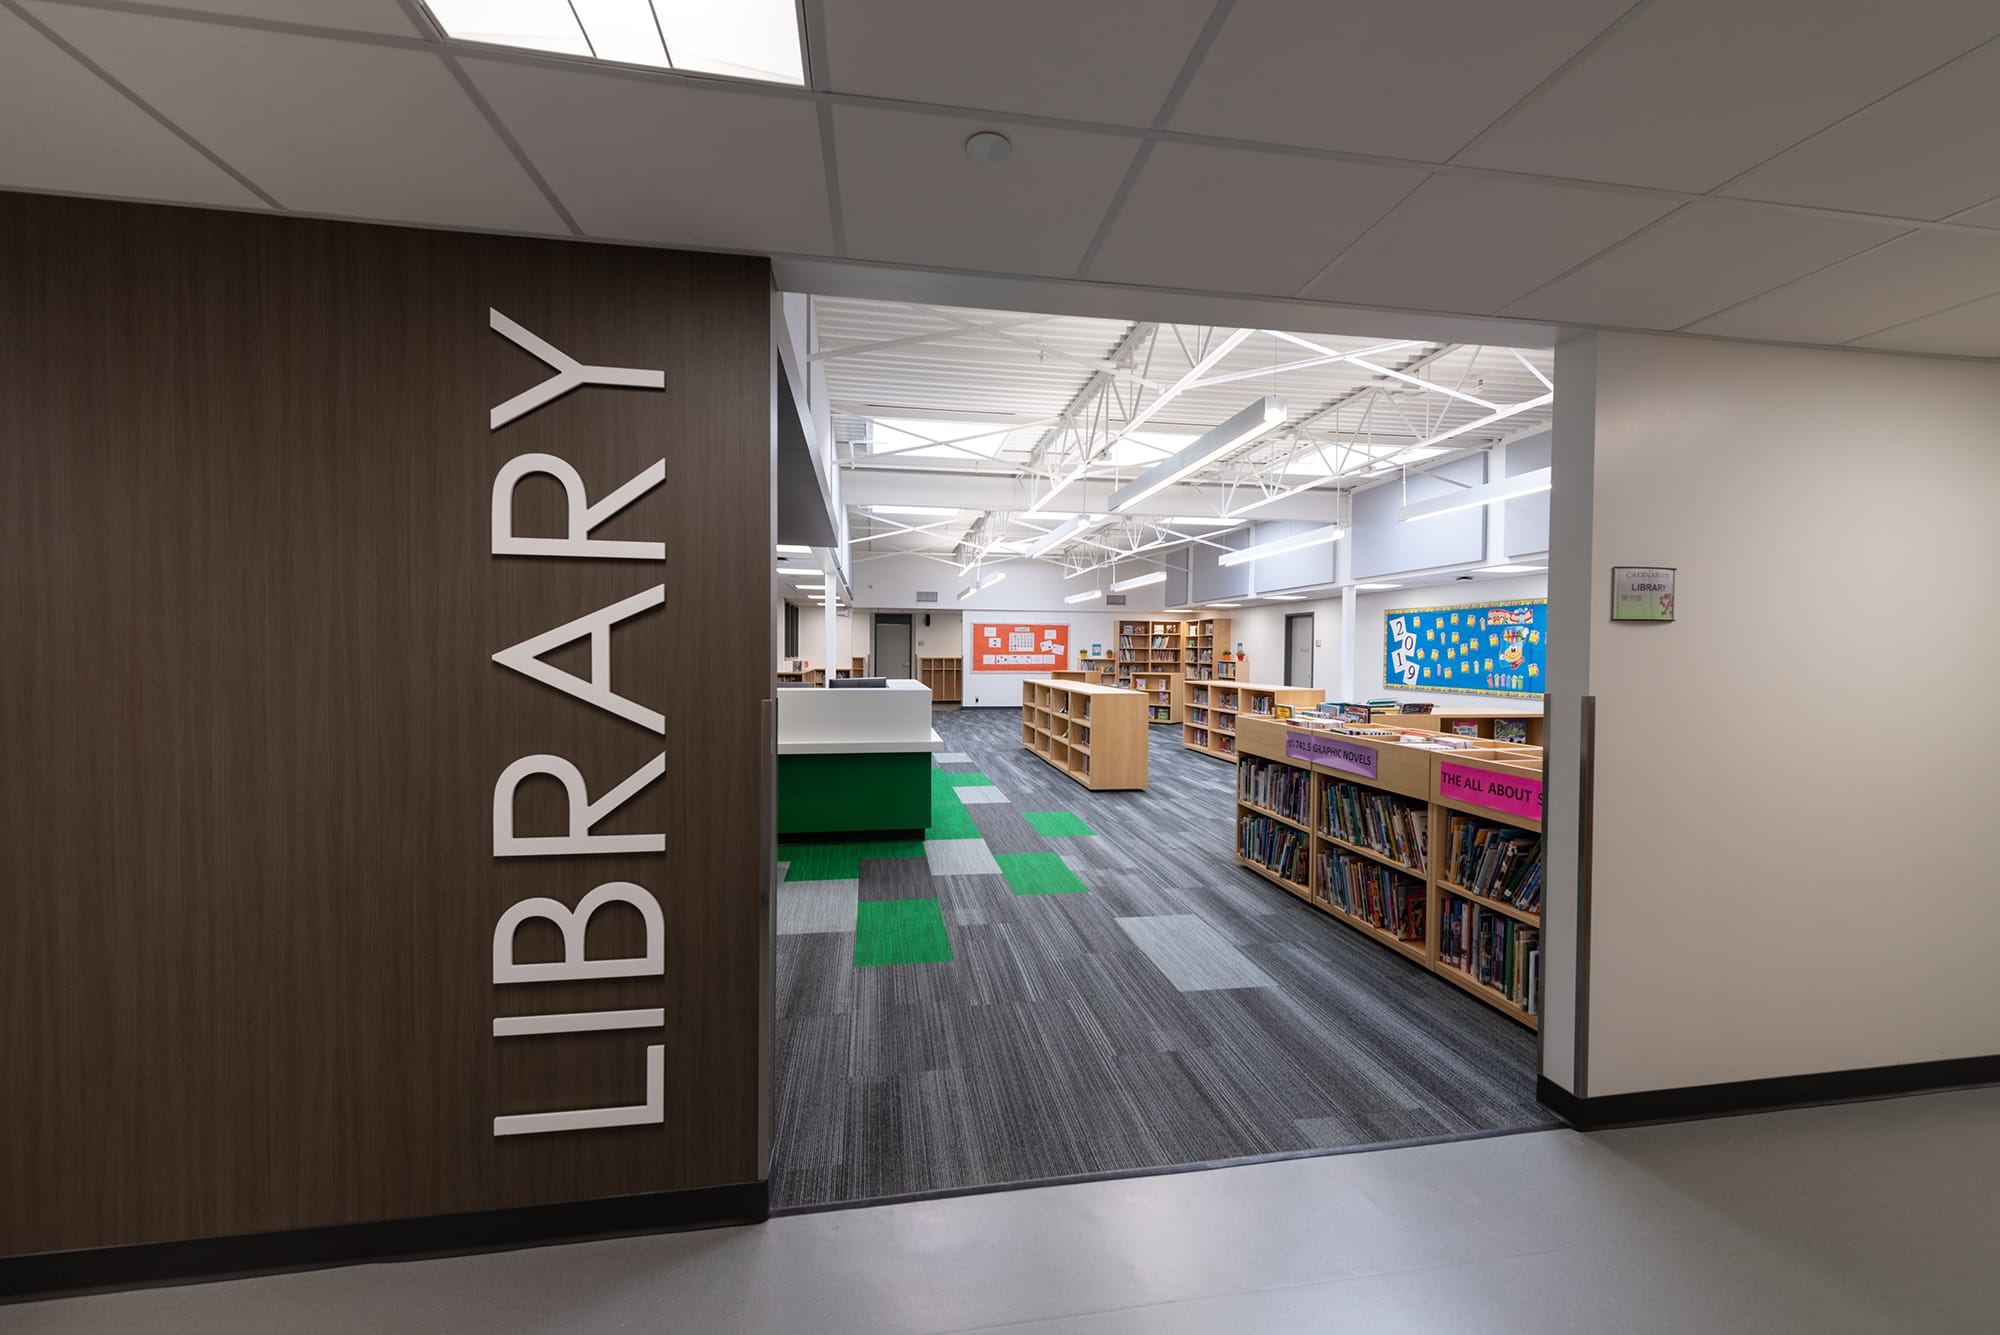 Caernarvon Elementary School library